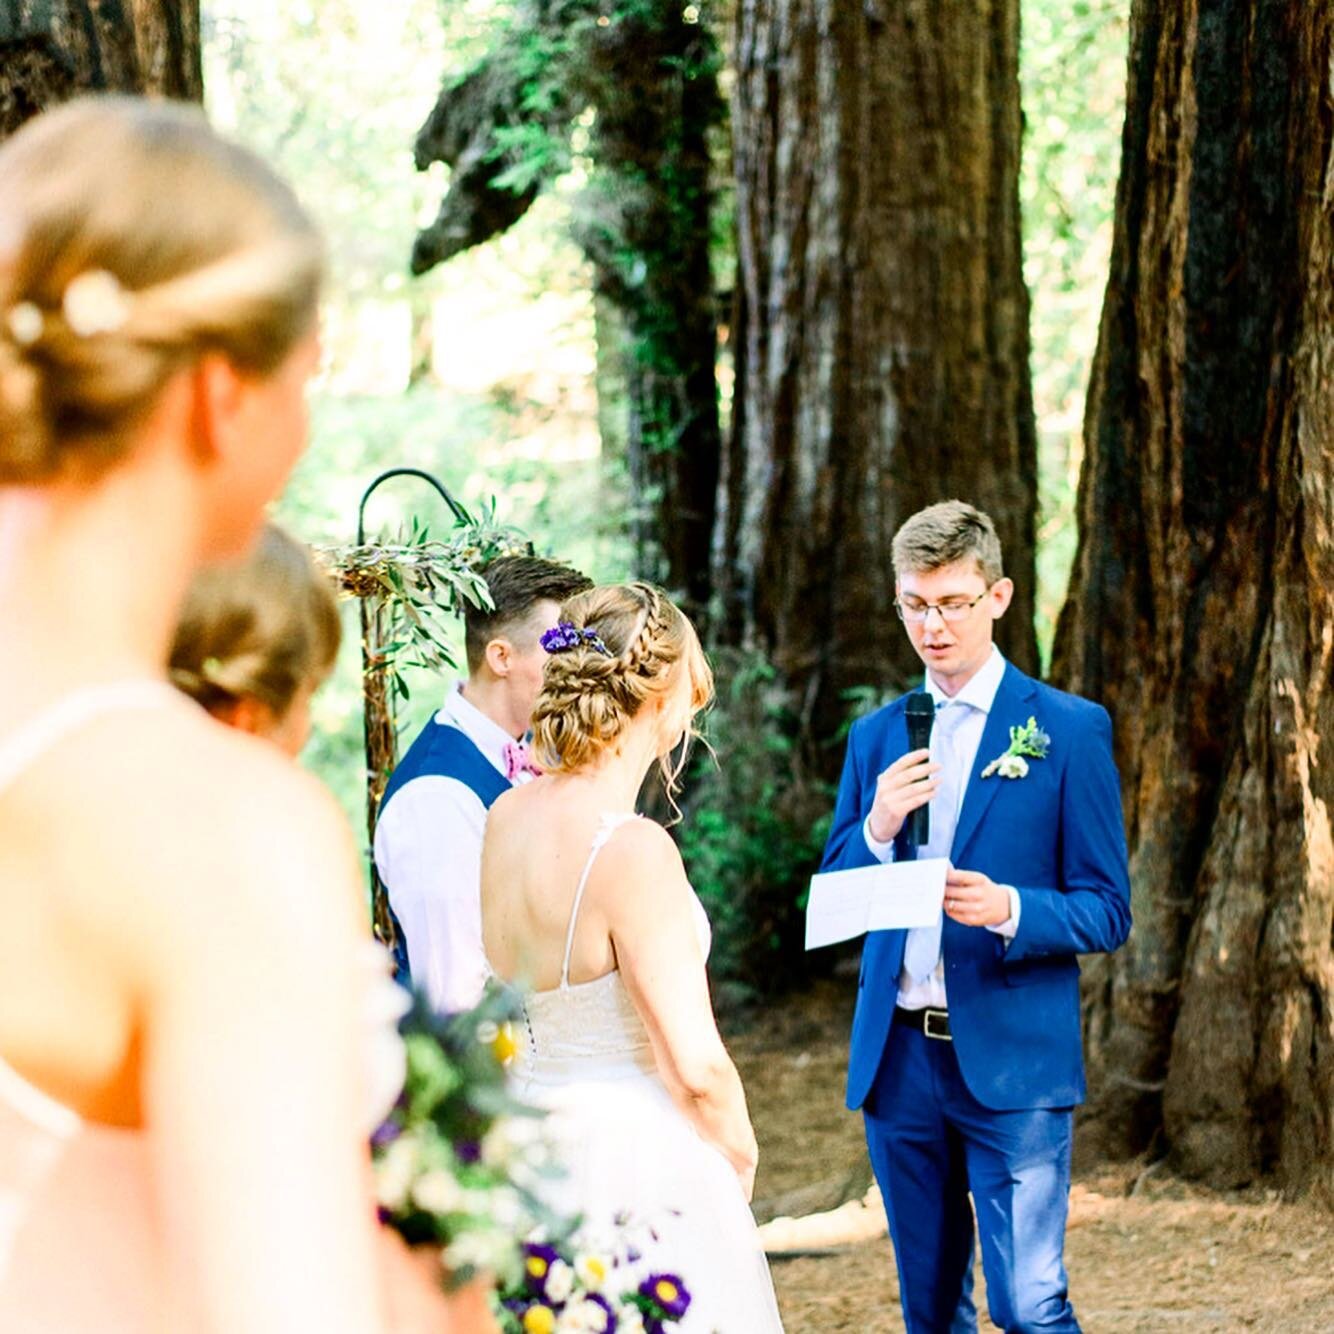 Ceremony in the redwoods 😍